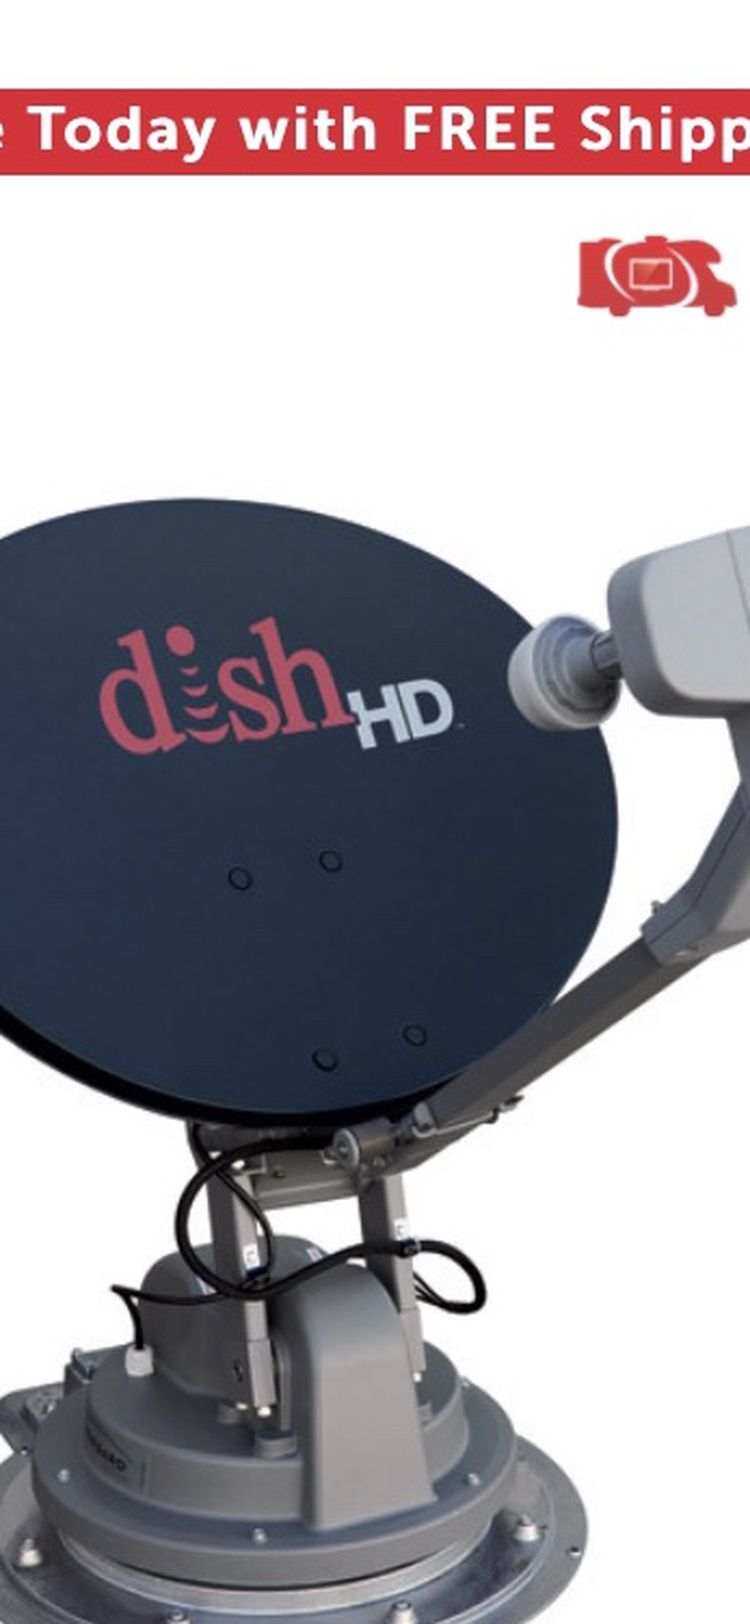 Winegard SK-1000 TRAV'LER DISH HD Satellite TV Antenna for the RV Motorhome Camper